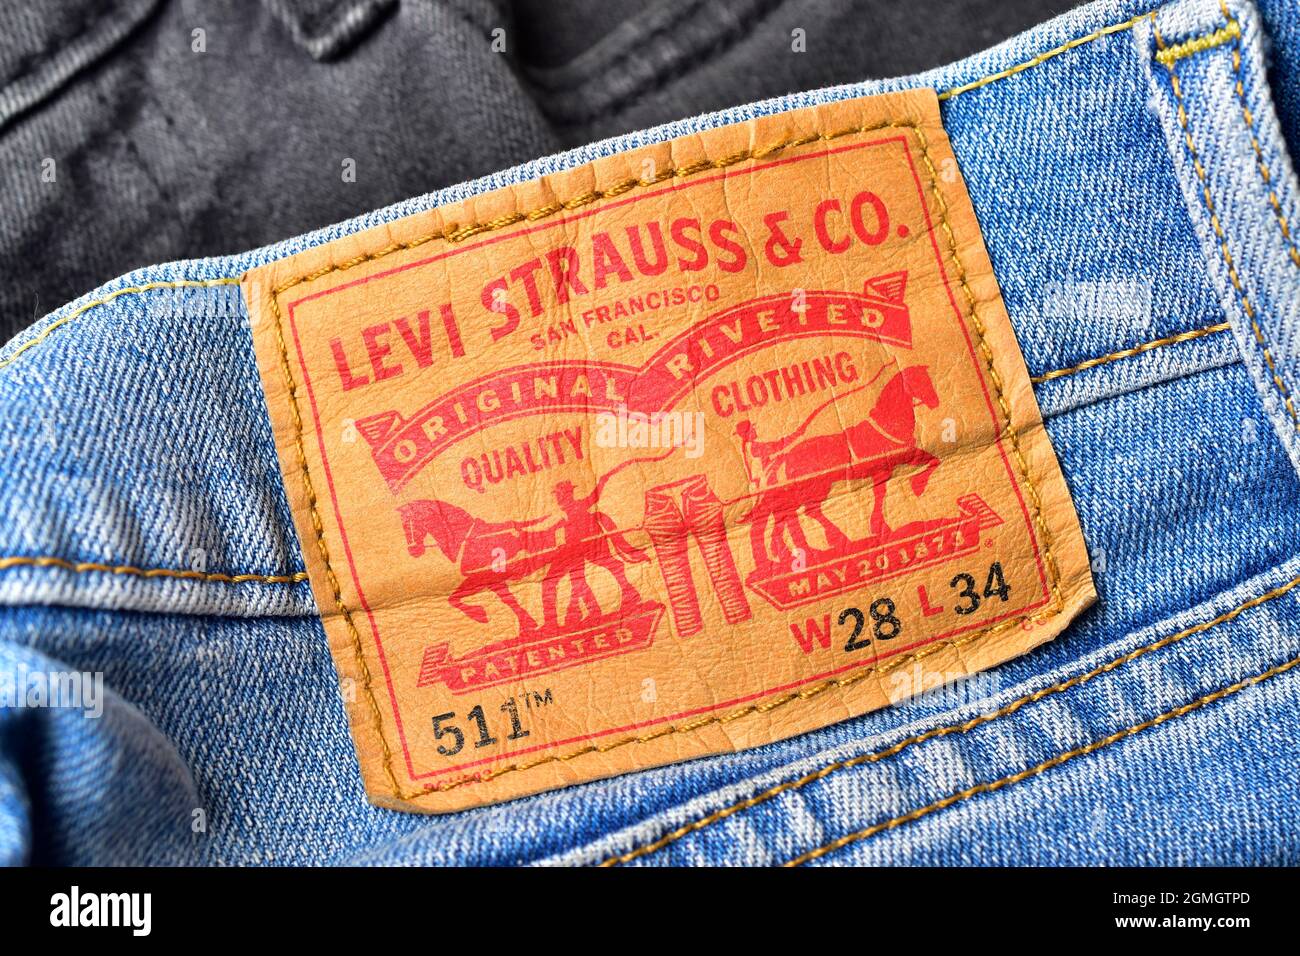 New Delhi, India - 22 November, 2019: Levi Brand Tag on Jeans Stock ...